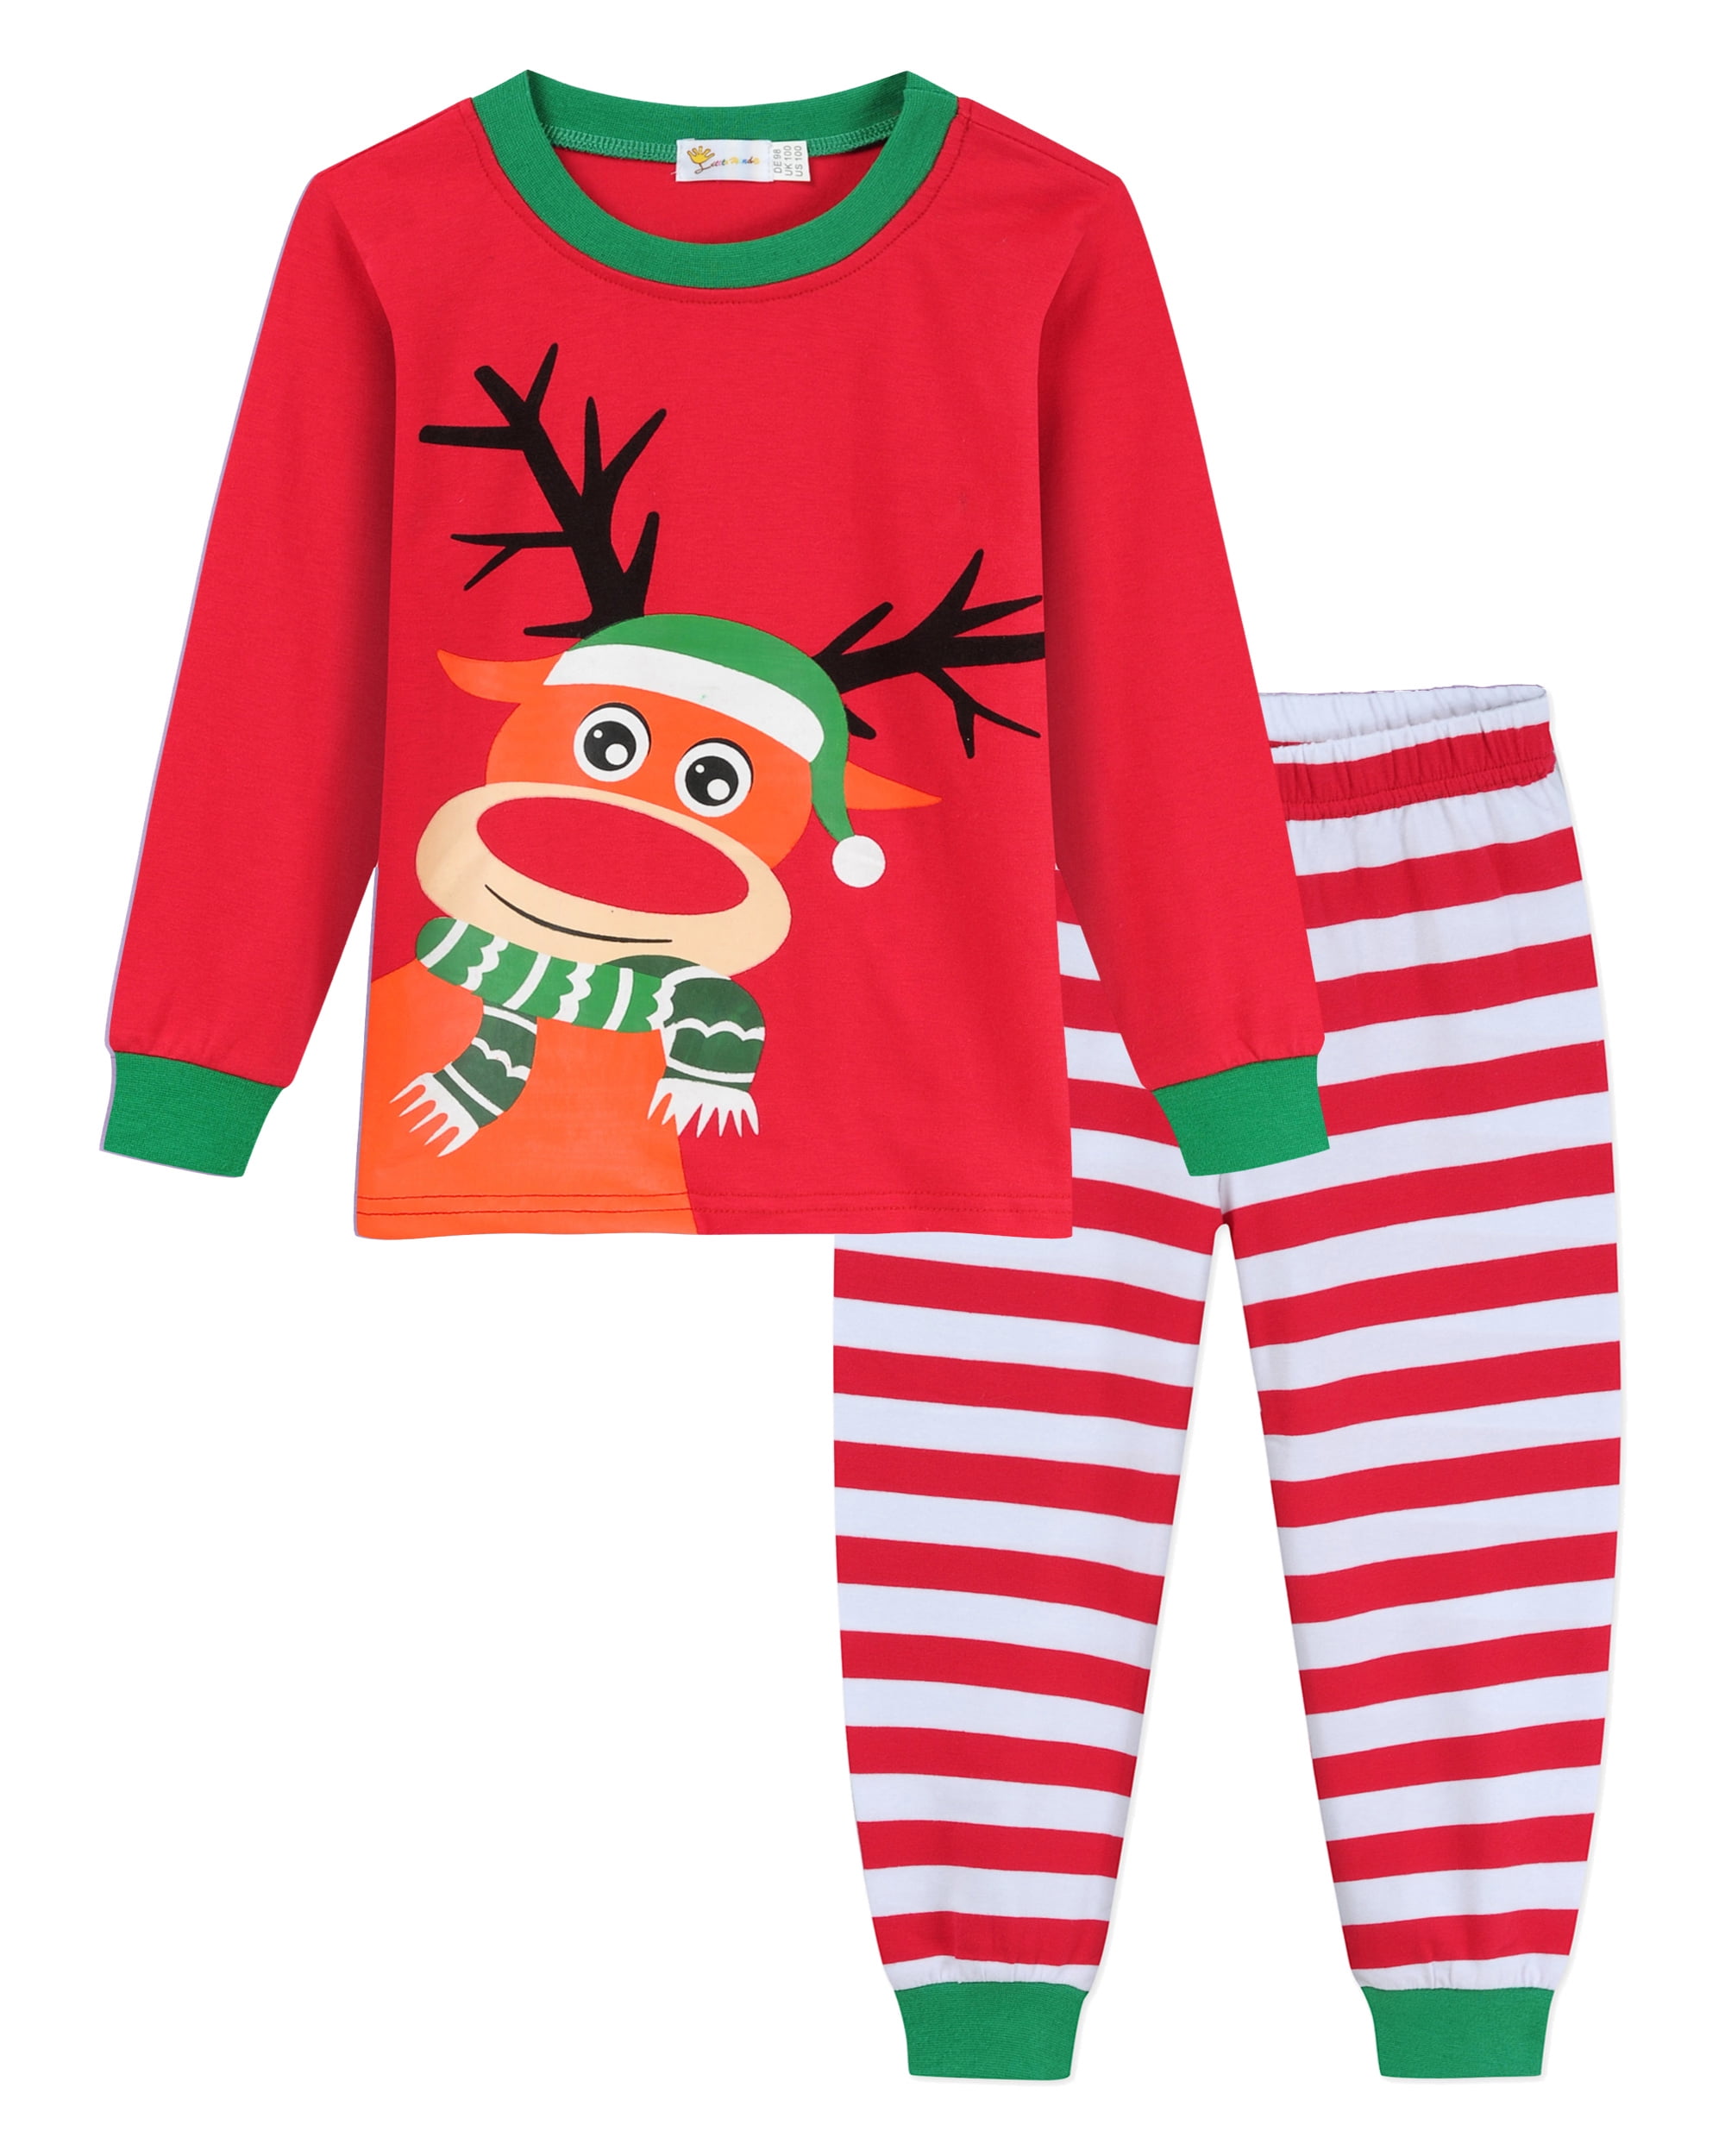 Little Boys Girls Christmas Pajamas Sets Reindeer Santa Claus 100% Cotton 2 Piece Toddler Clothes Kids Pjs Sleepwear